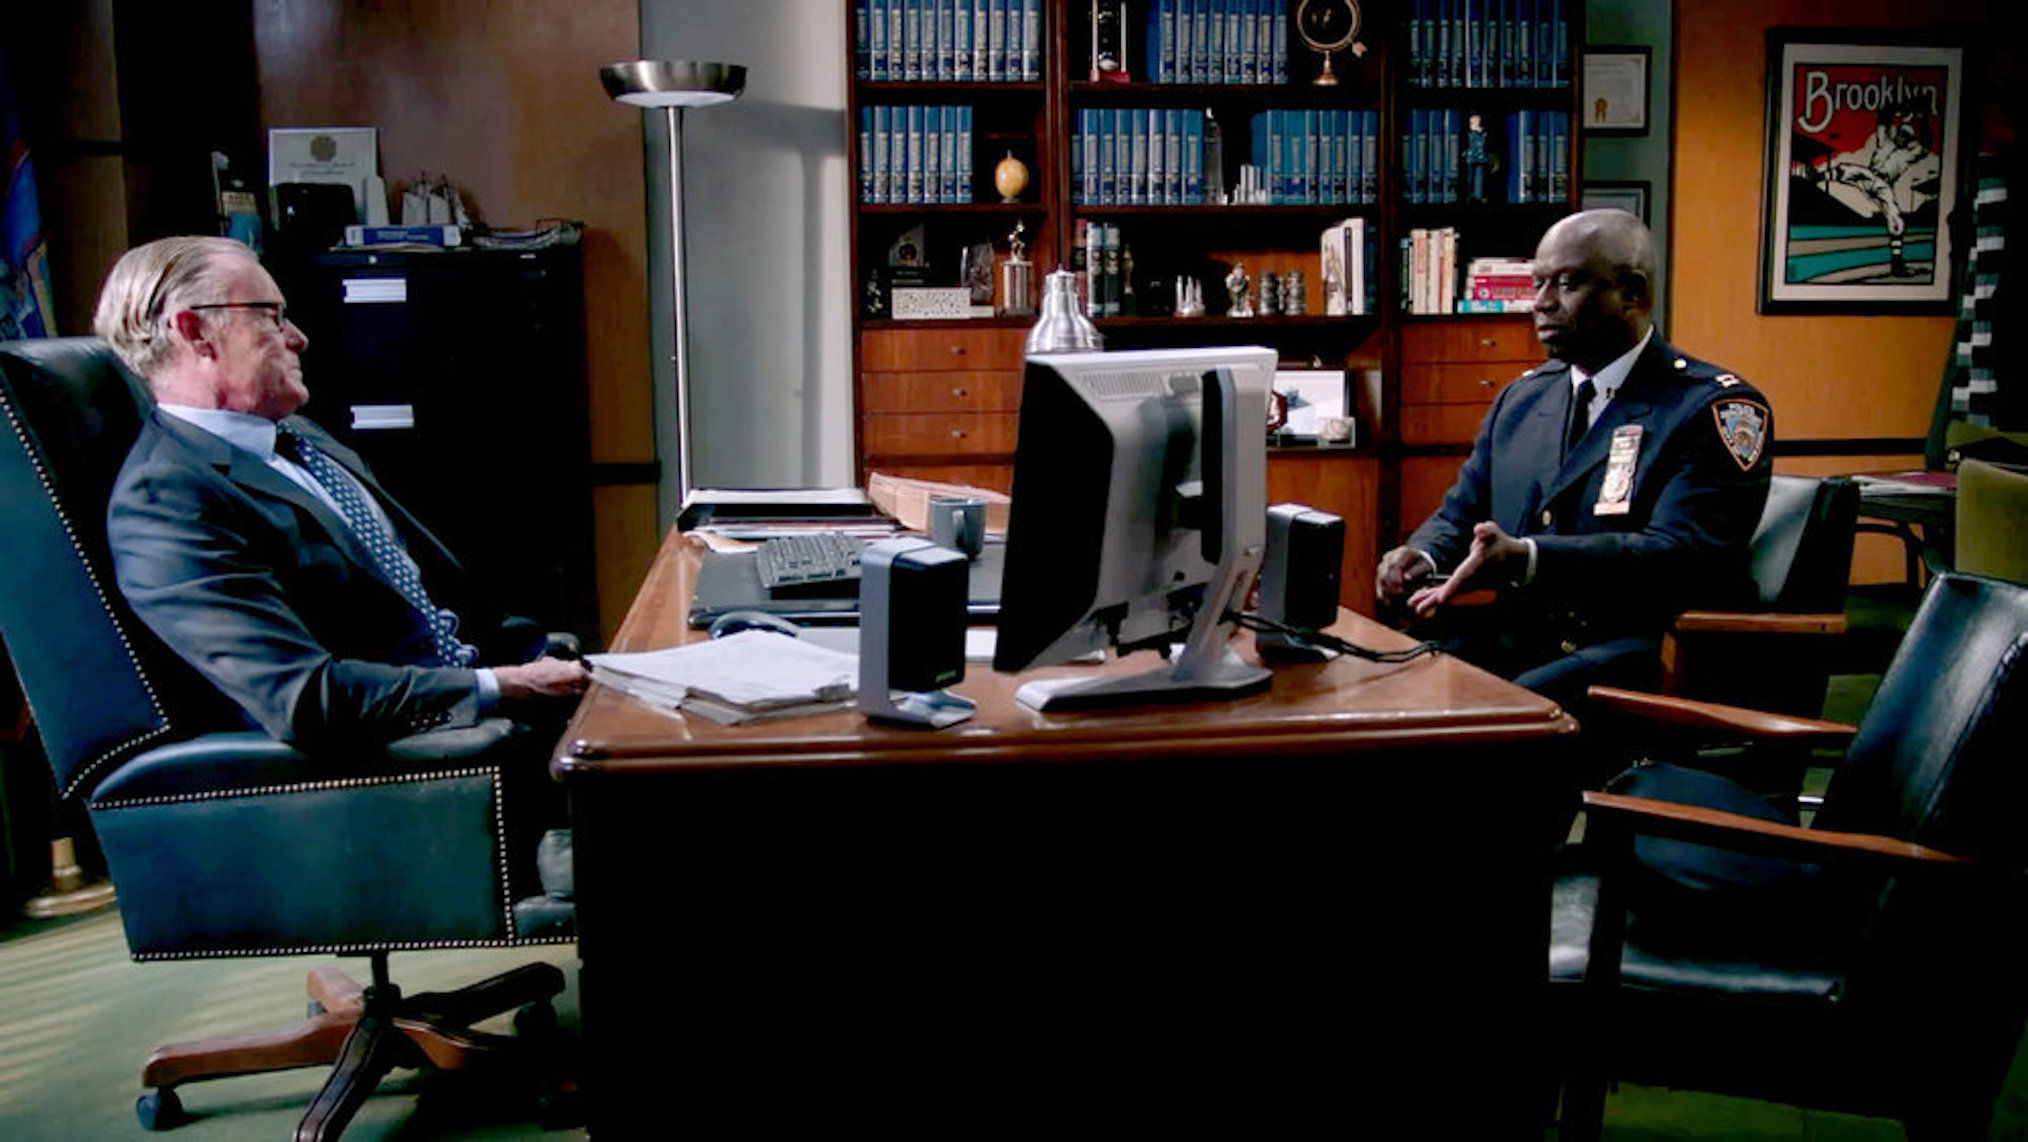 'Brooklyn Nine-Nine' Guest Star John C. McGinley and Star Andre Braugher